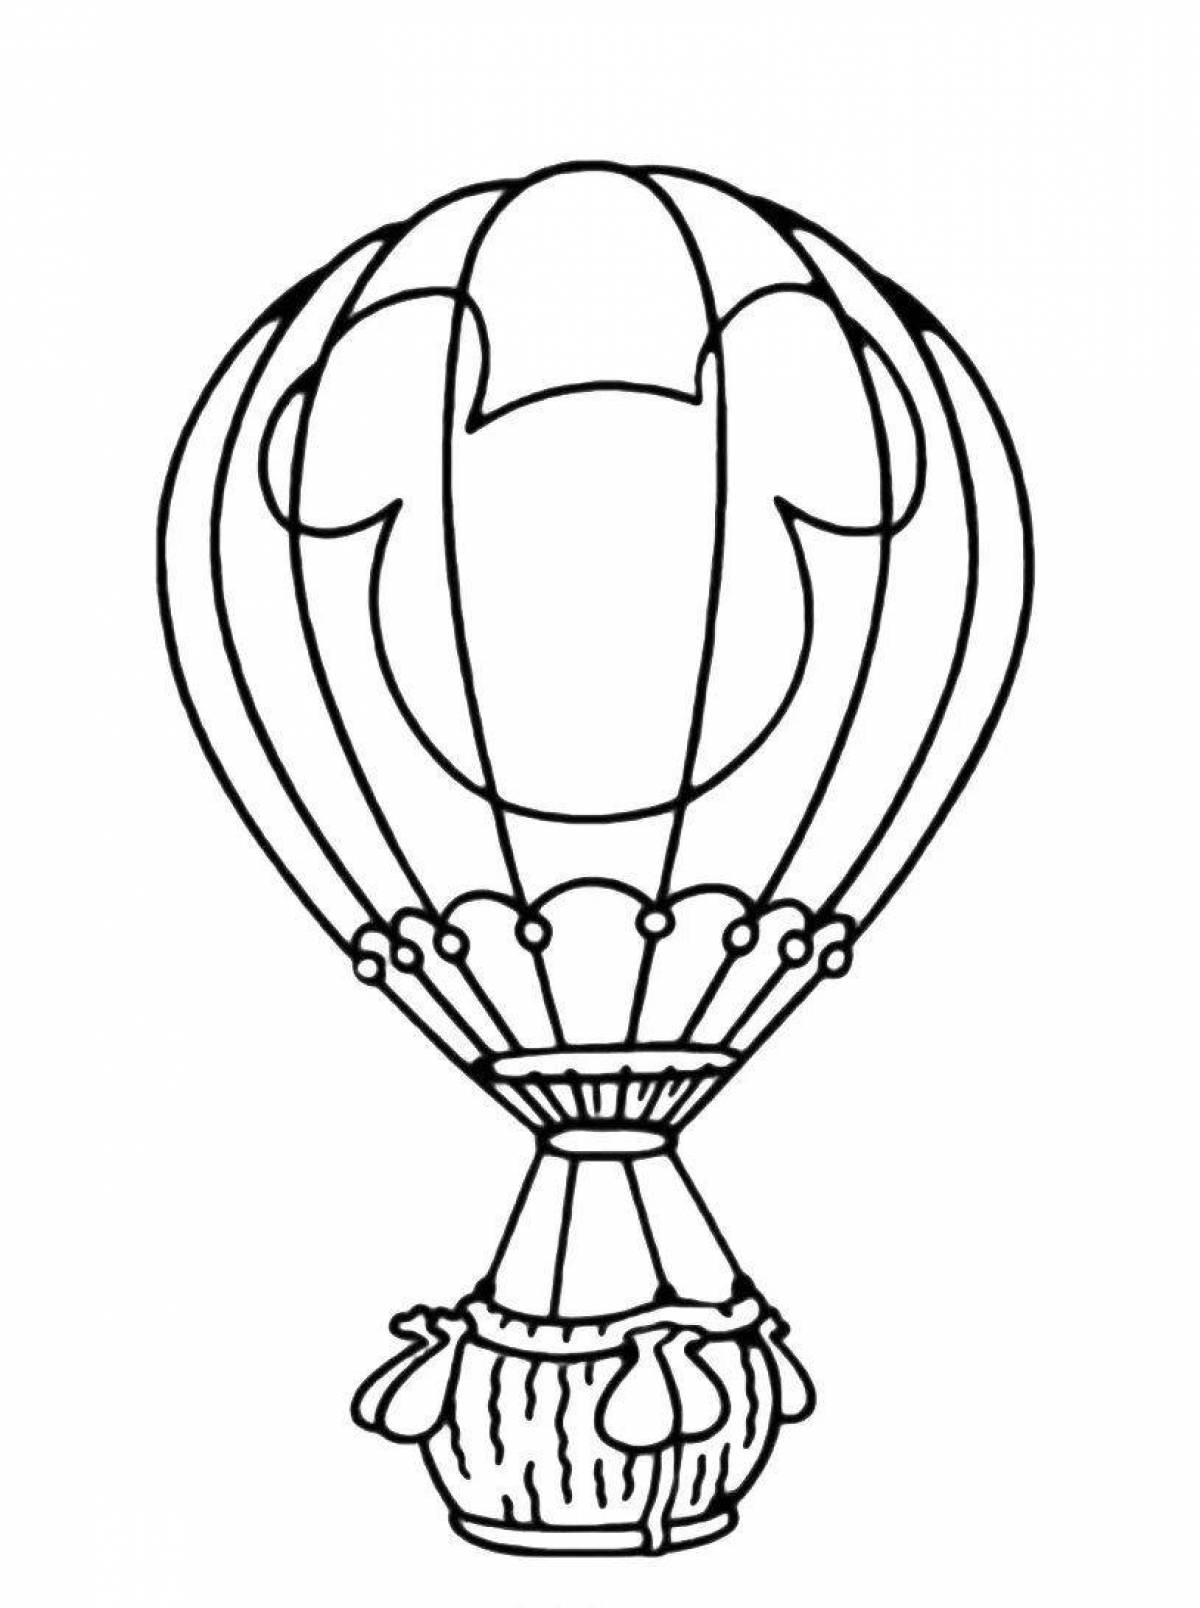 Great balloon drawing